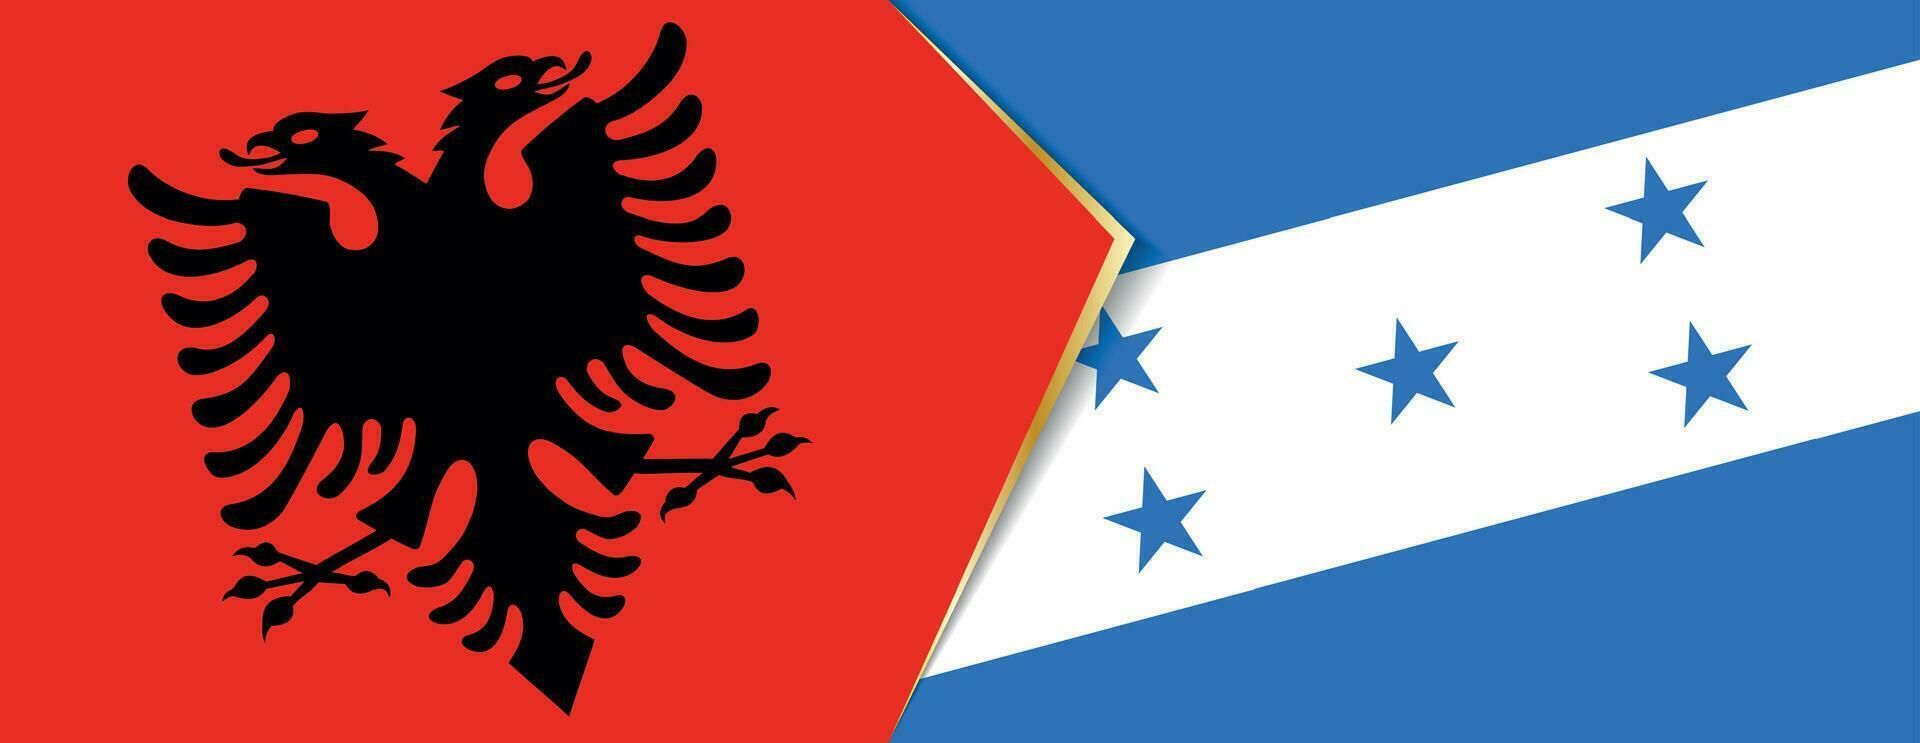 Albania and Honduras flags, two vector flags.